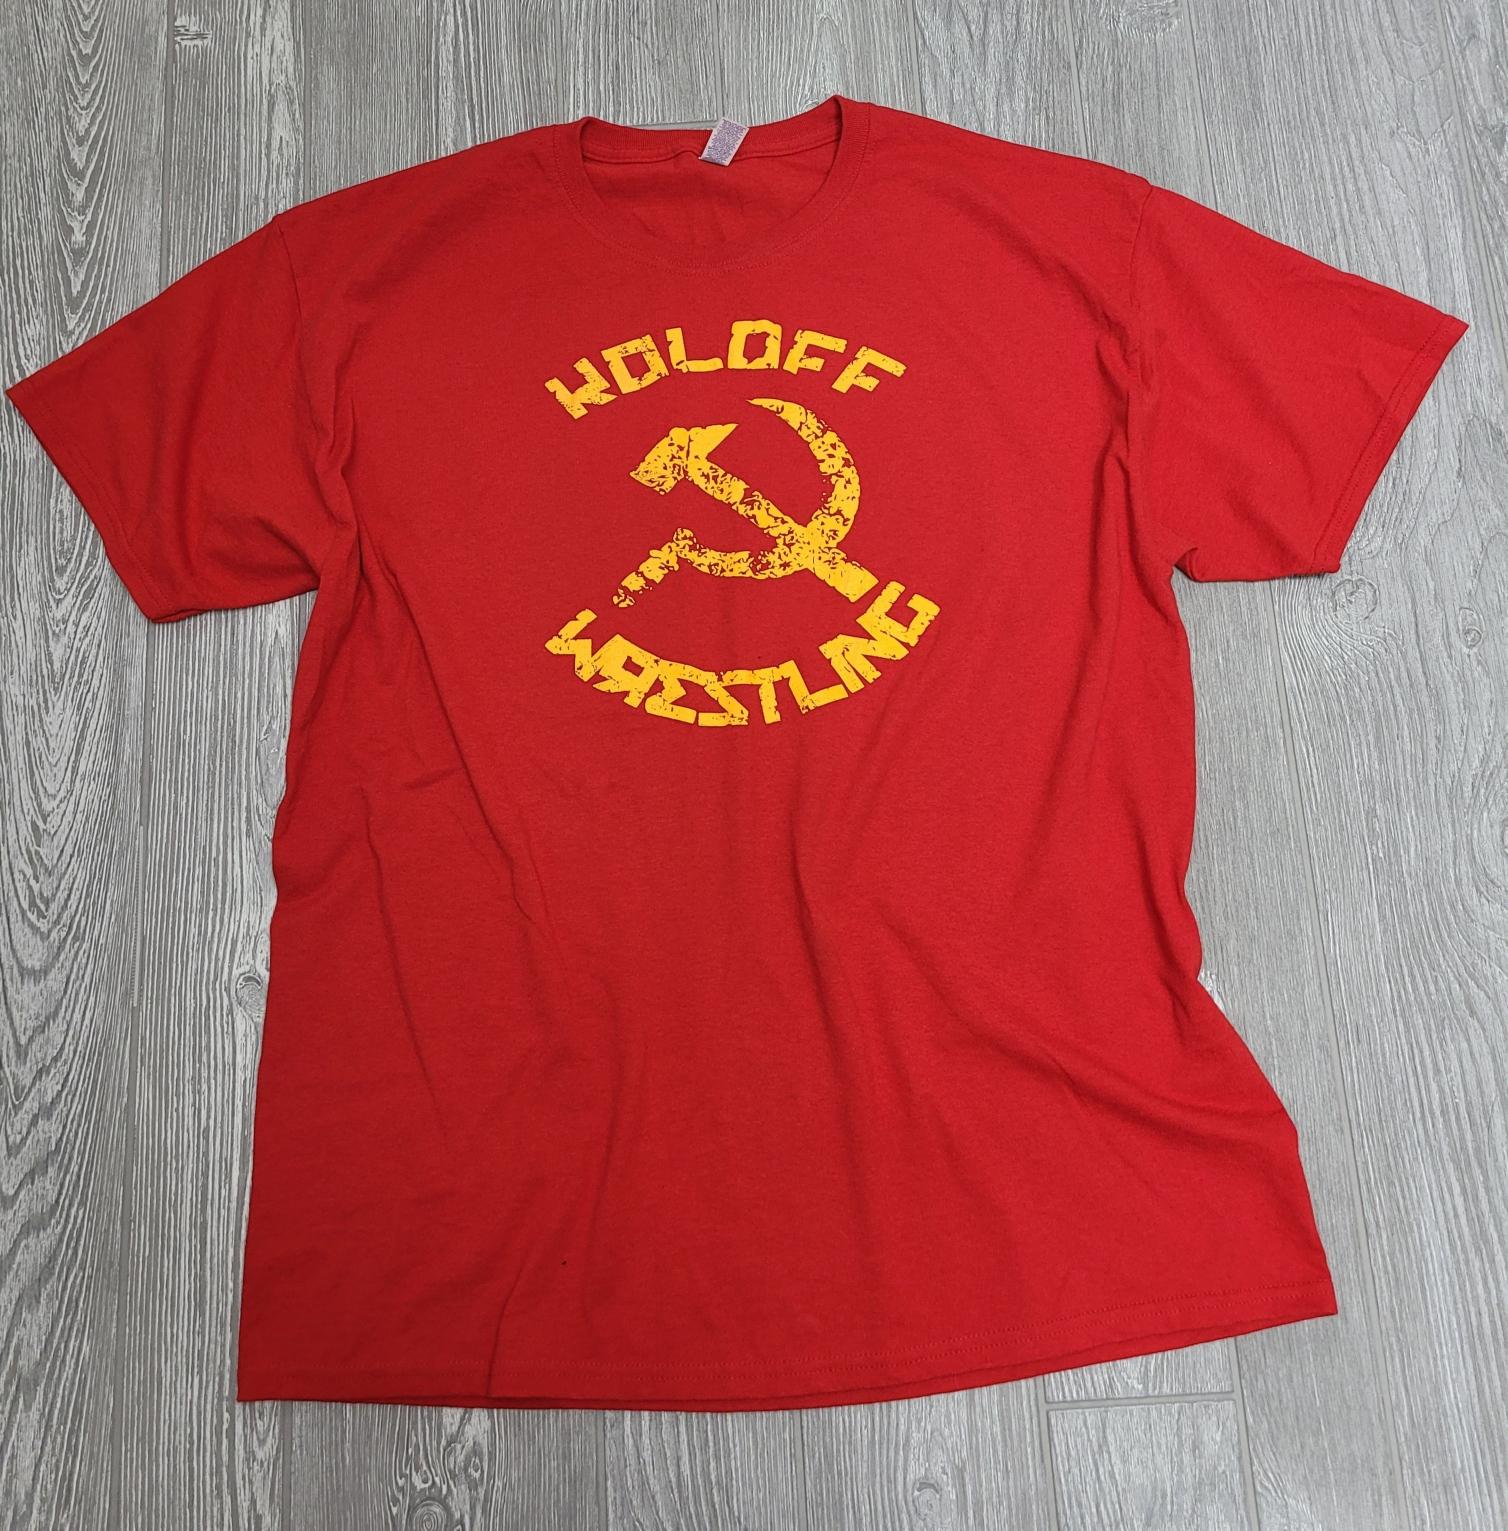 T-shirt - Koloff Wrestling Hammer & Sickle (red)